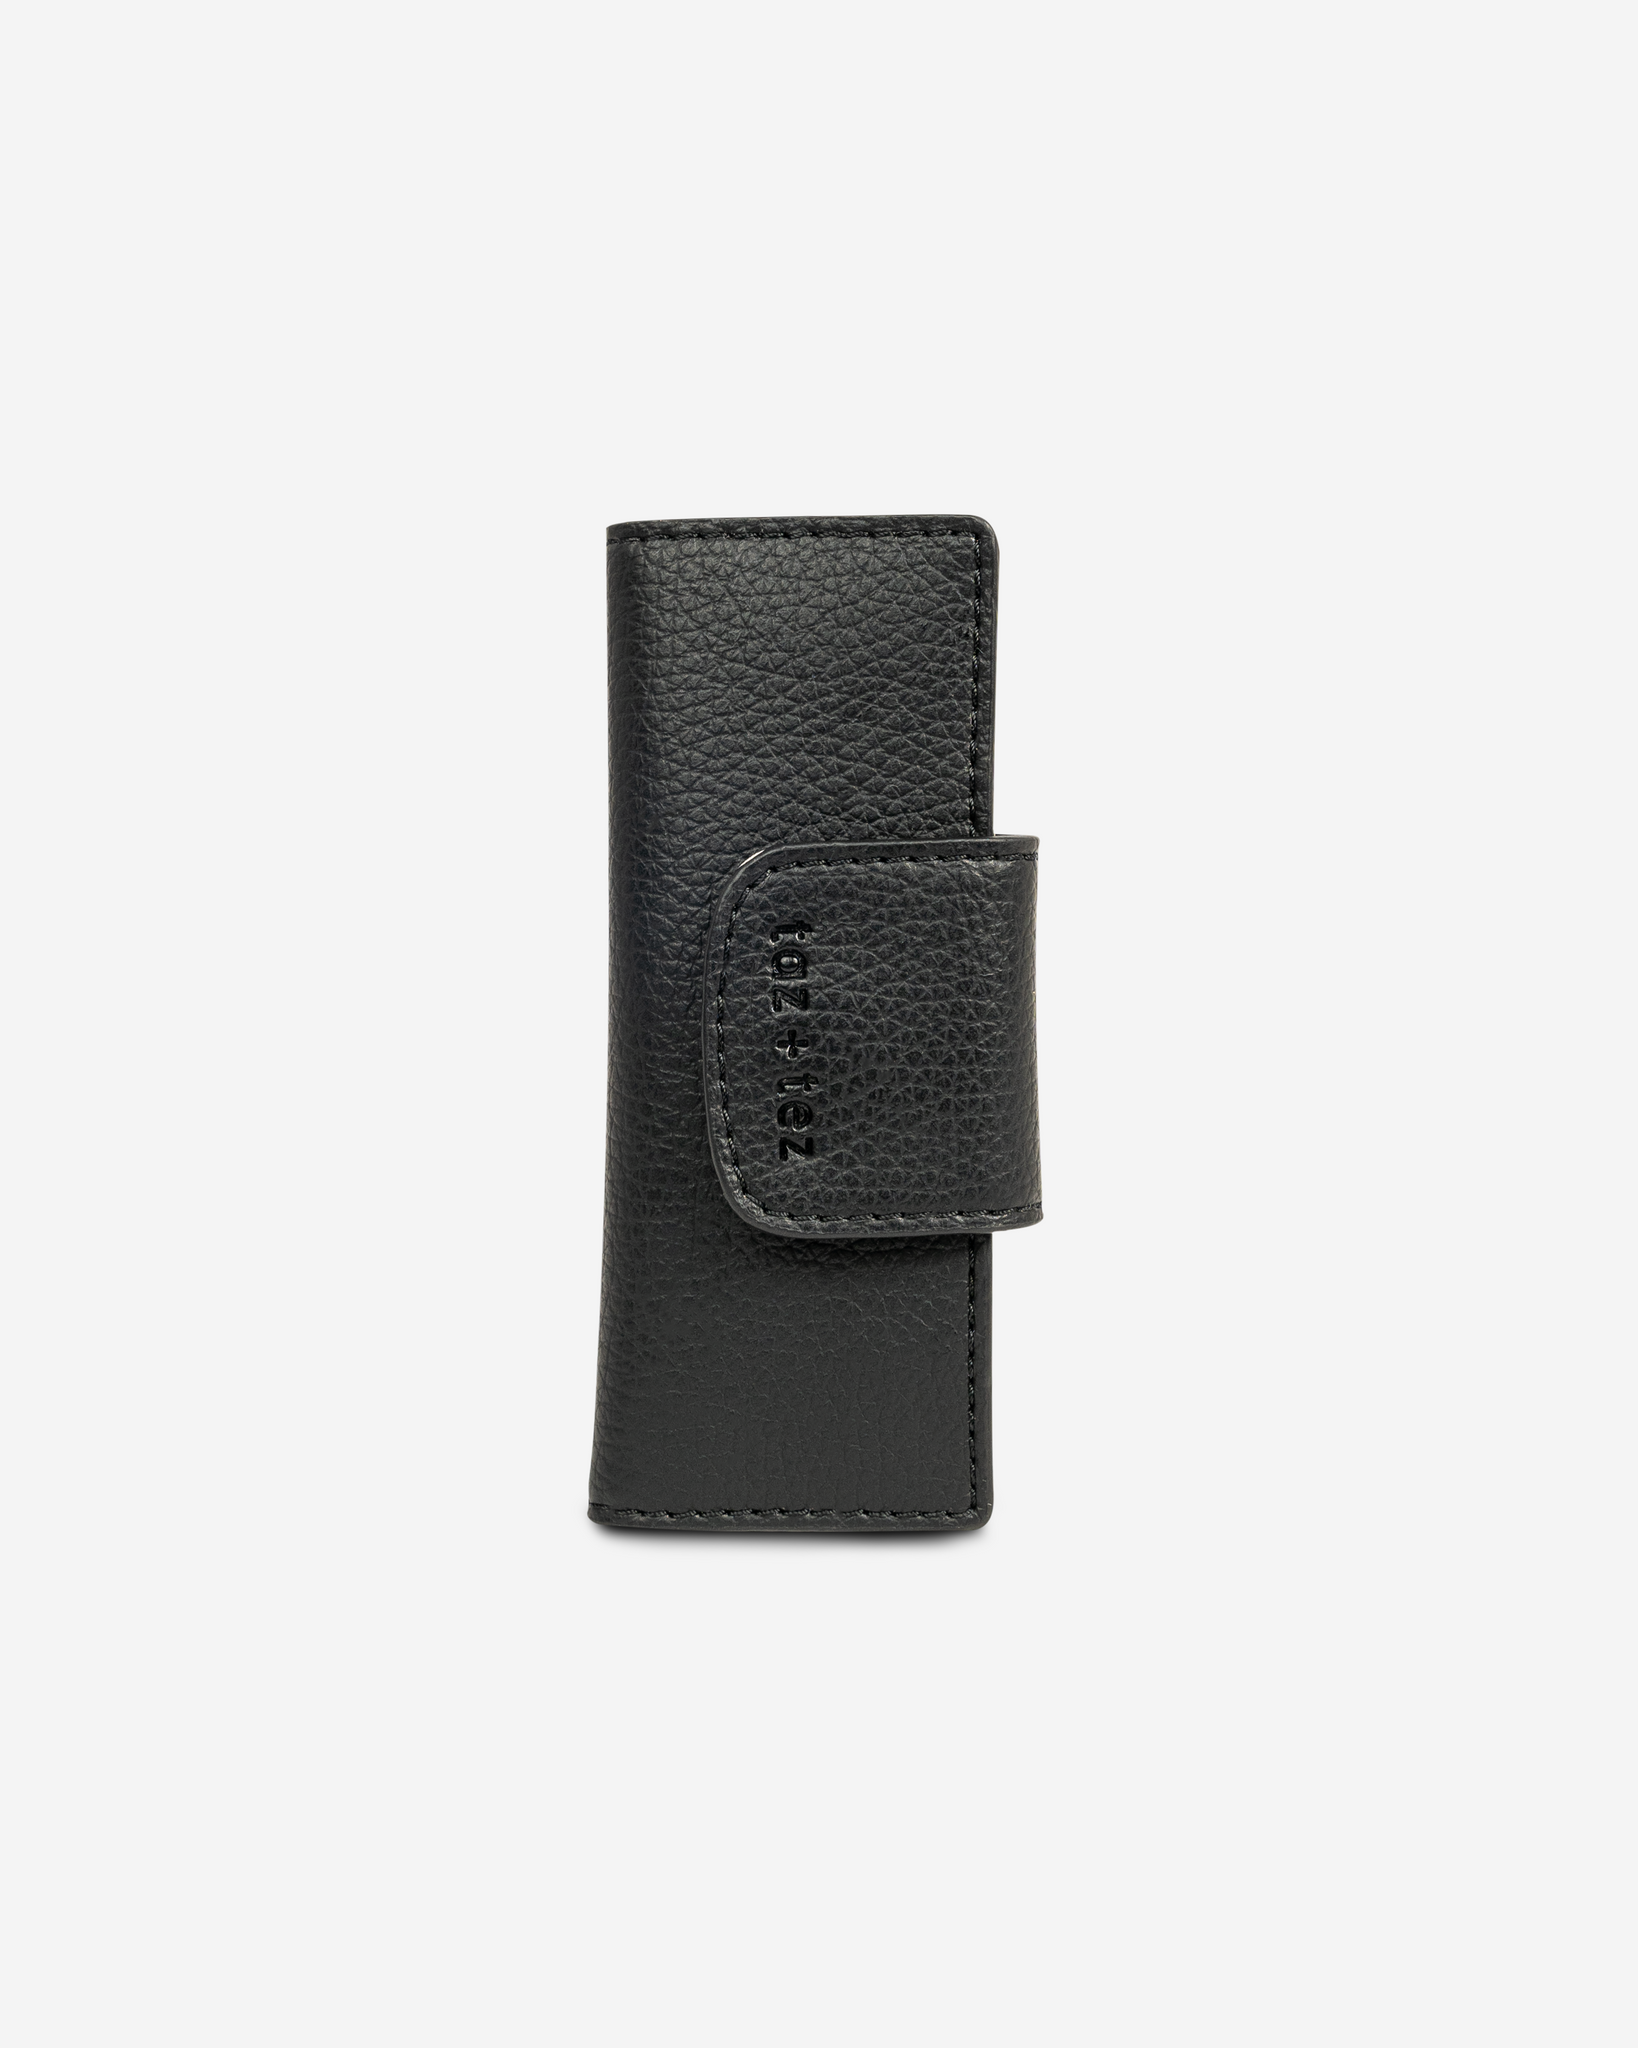 SD Card Pocket Organiser (Black)